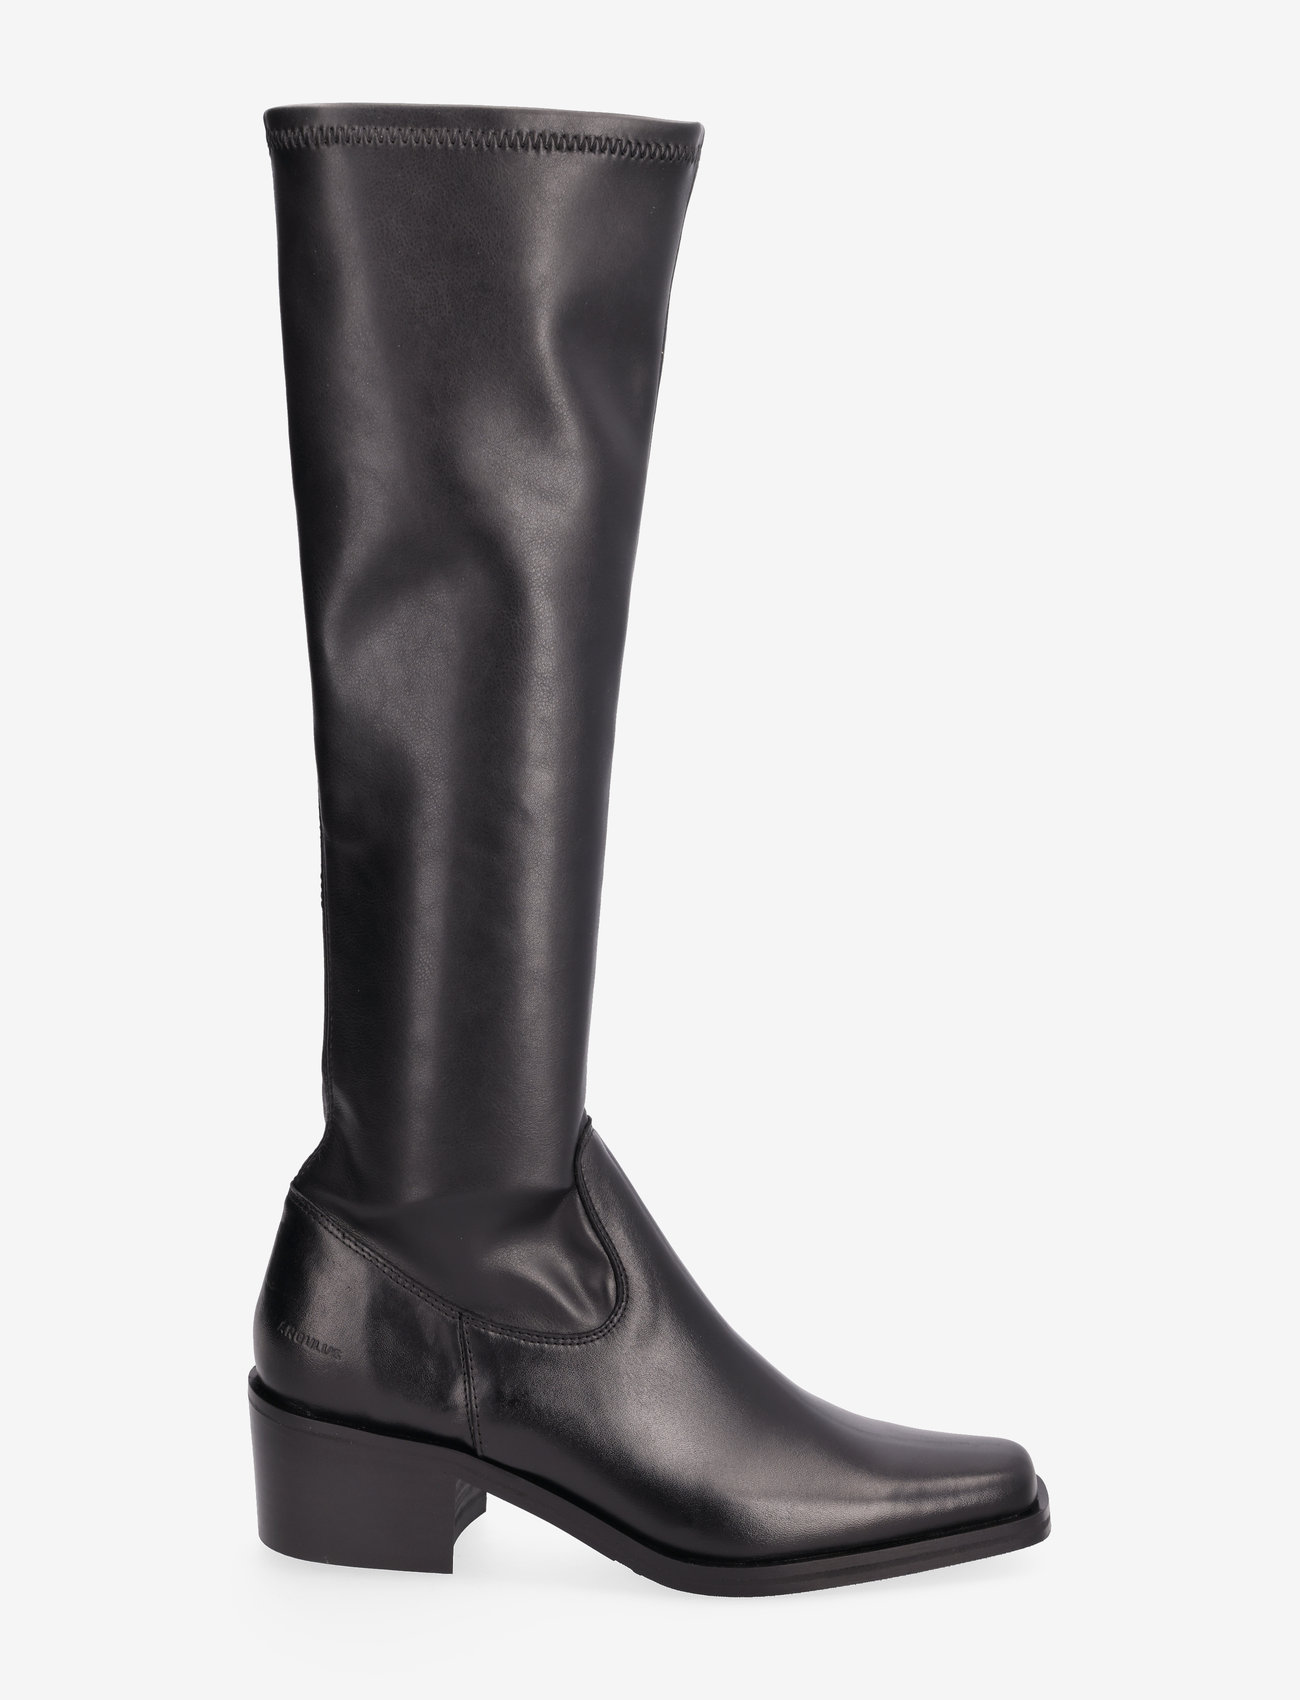 ANGULUS - Boots - Block heel - knee high boots - 1604/1746 black/black - 1